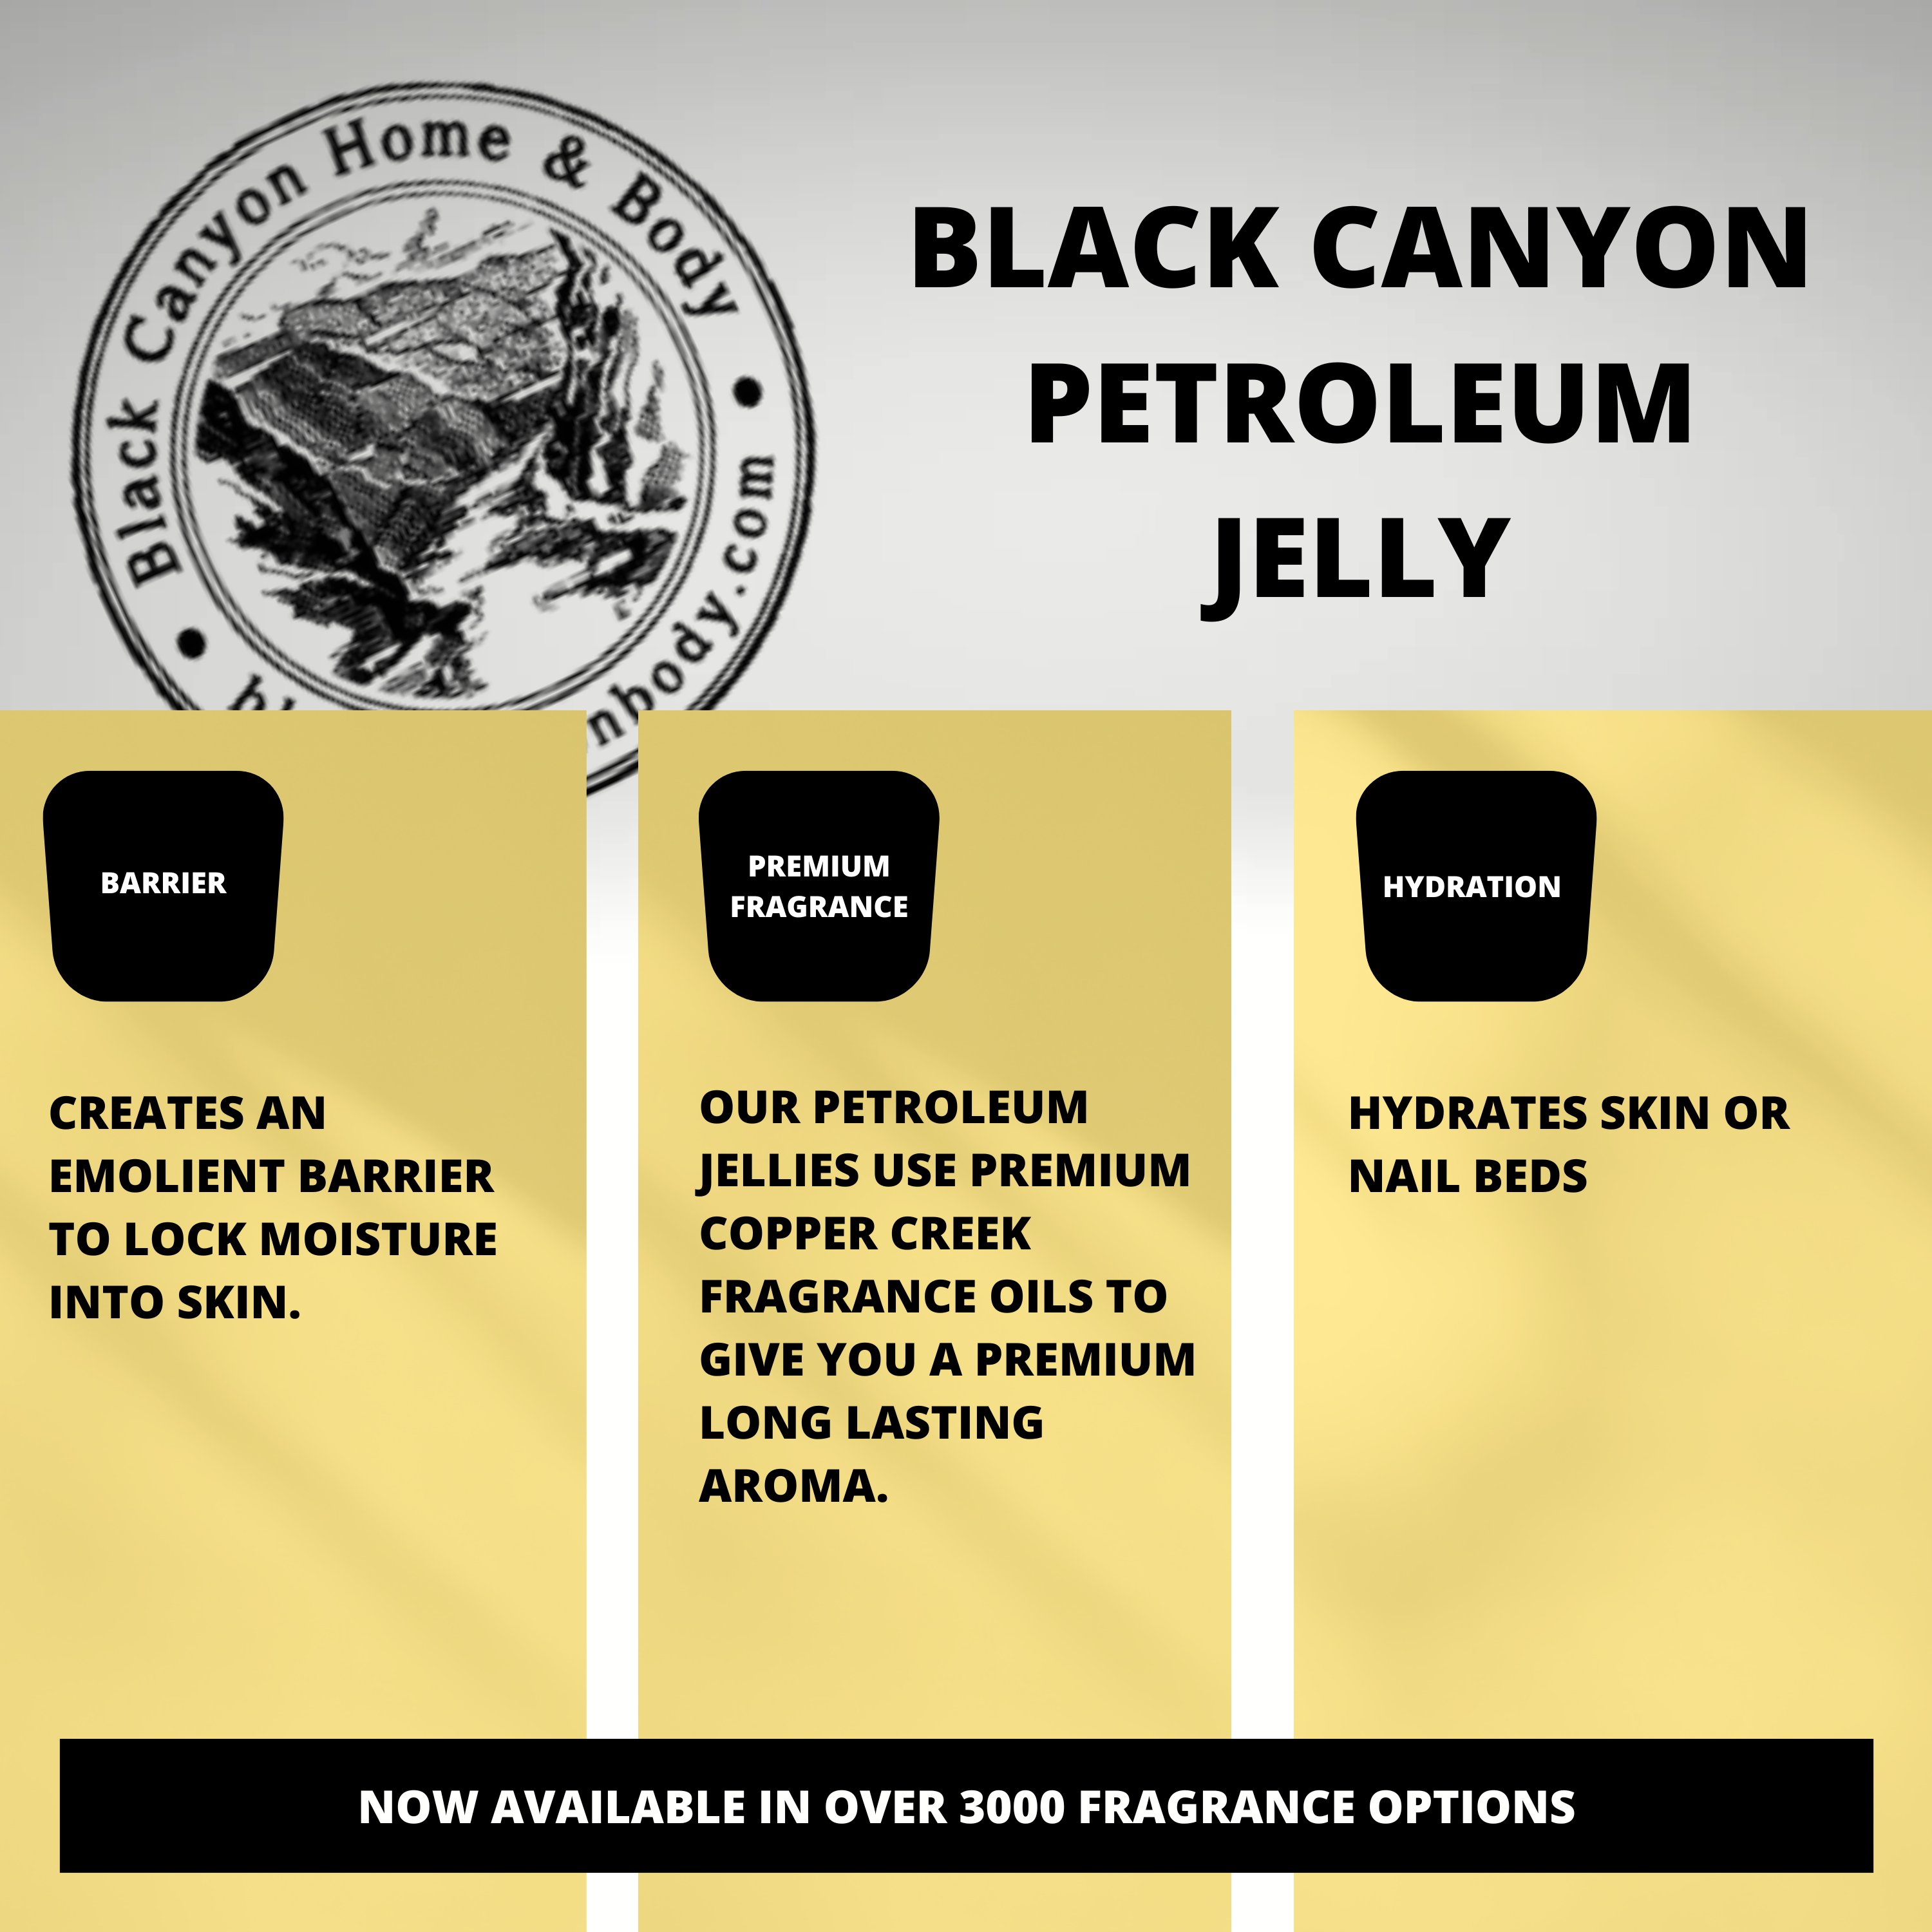 Black Canyon Bergamot & Tobacco Flower Scented Petroleum Jelly